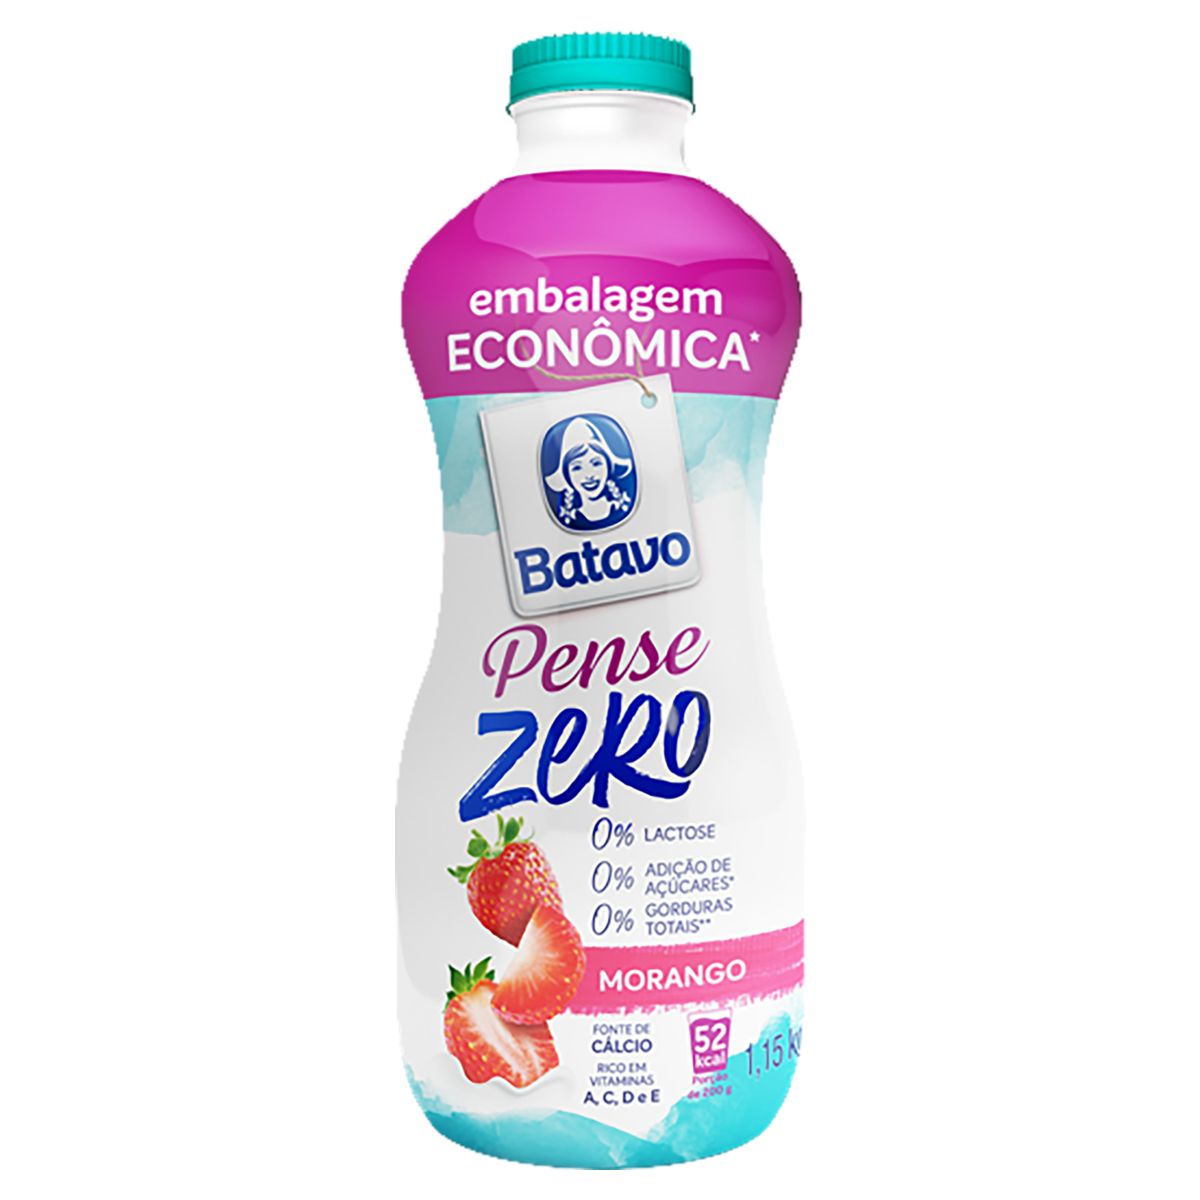 Iogurte Batavo Pense Morango Zero 1,15kg Embalagem Econômica